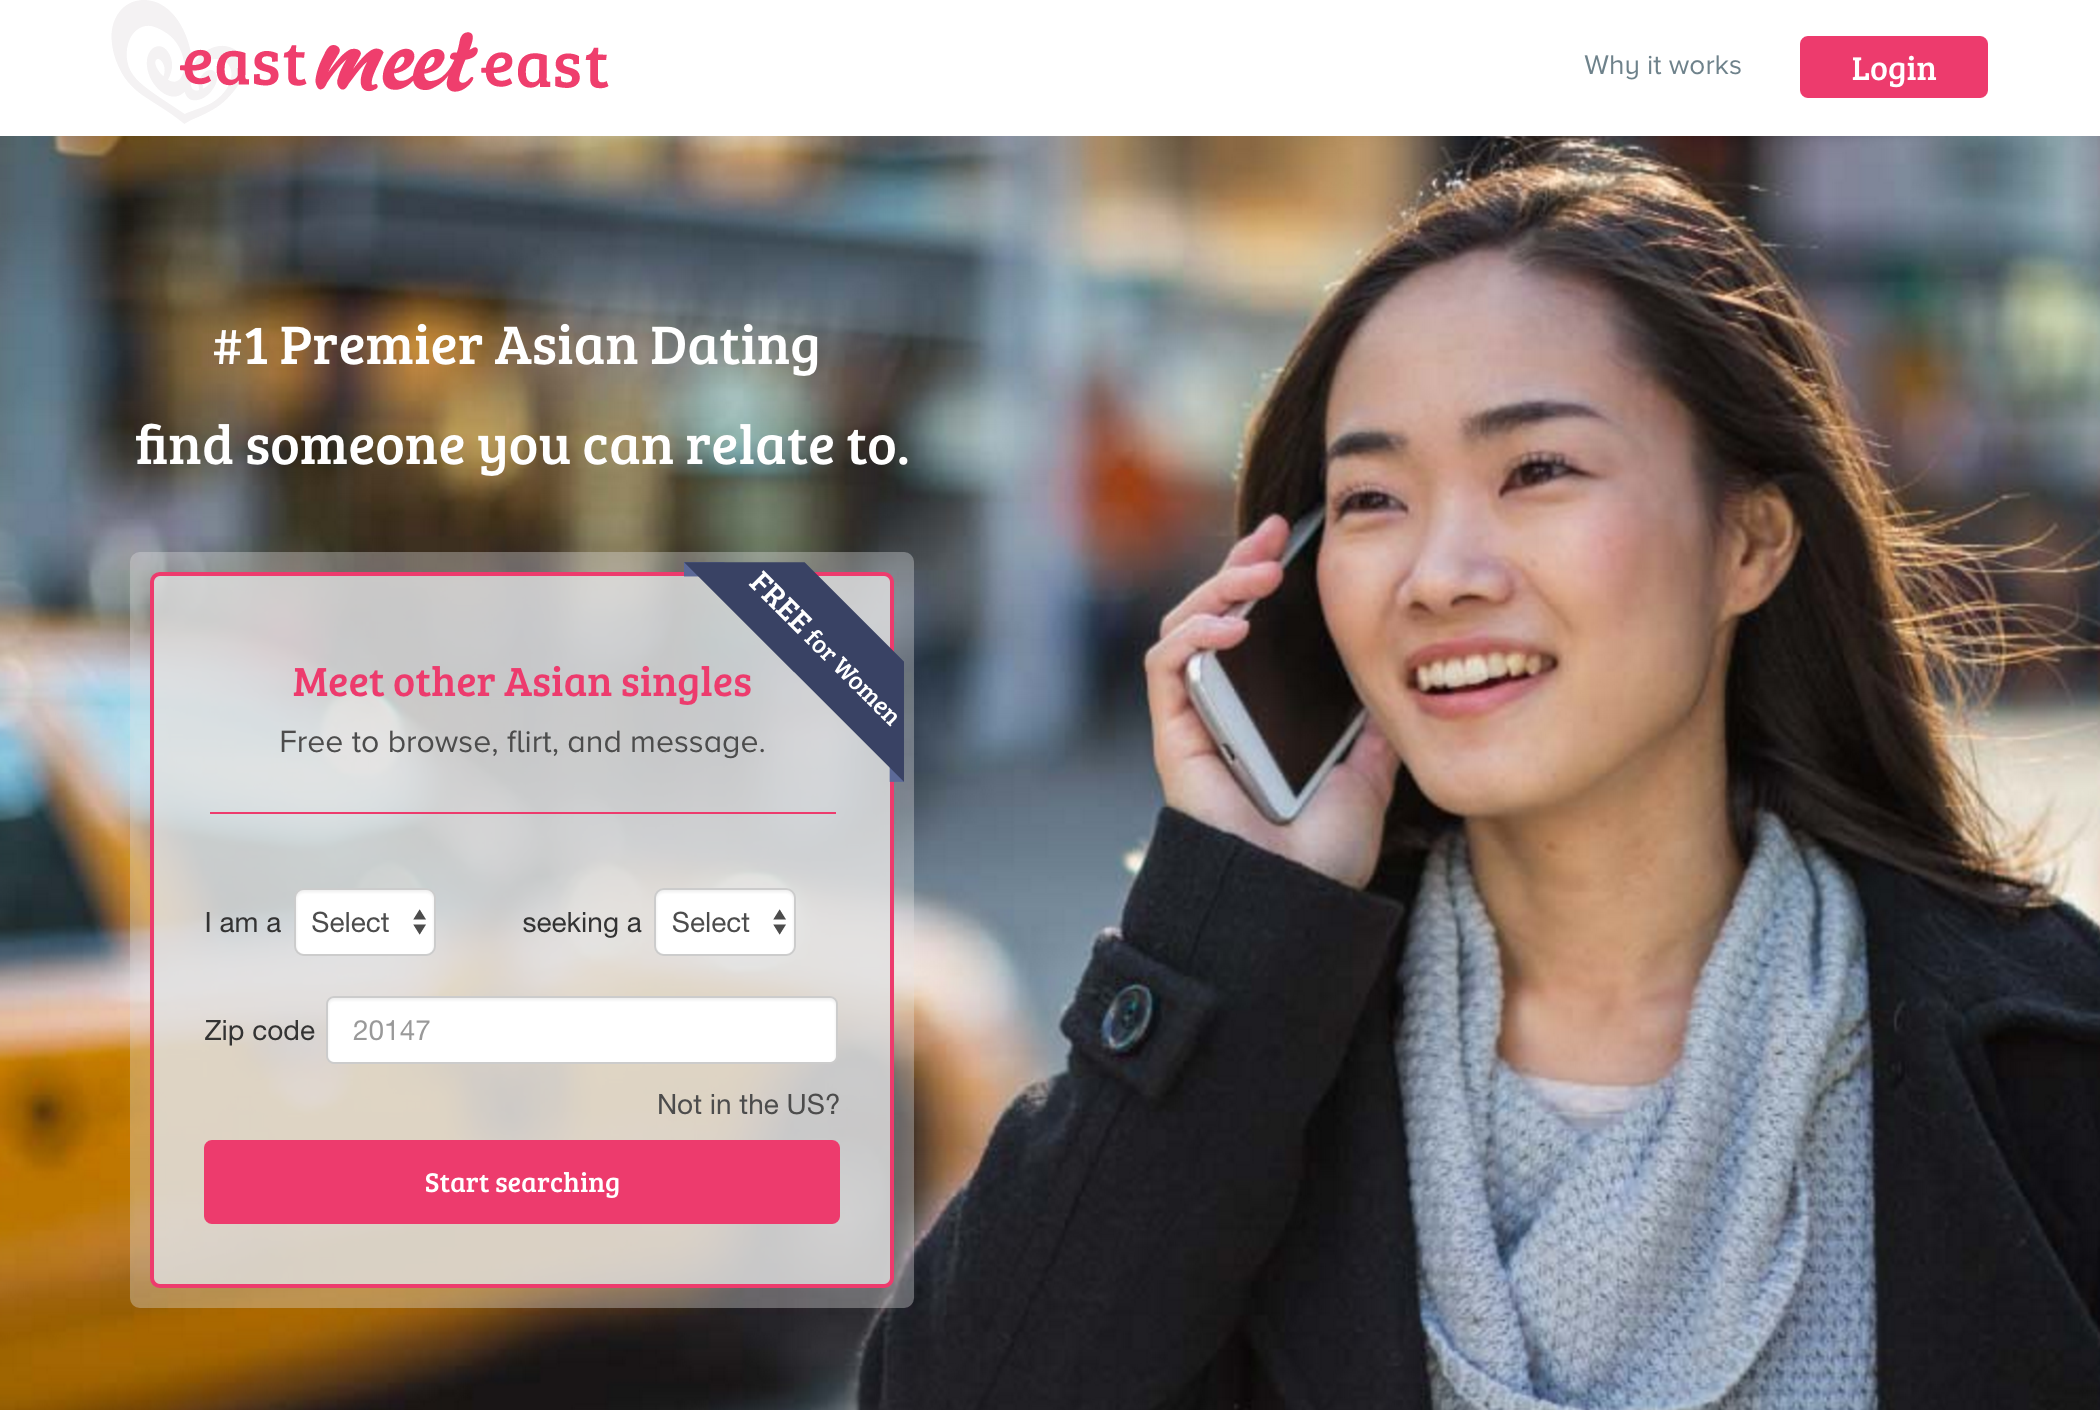 Asian Dating App East Meet East Raises $4 mil - AsAmNews